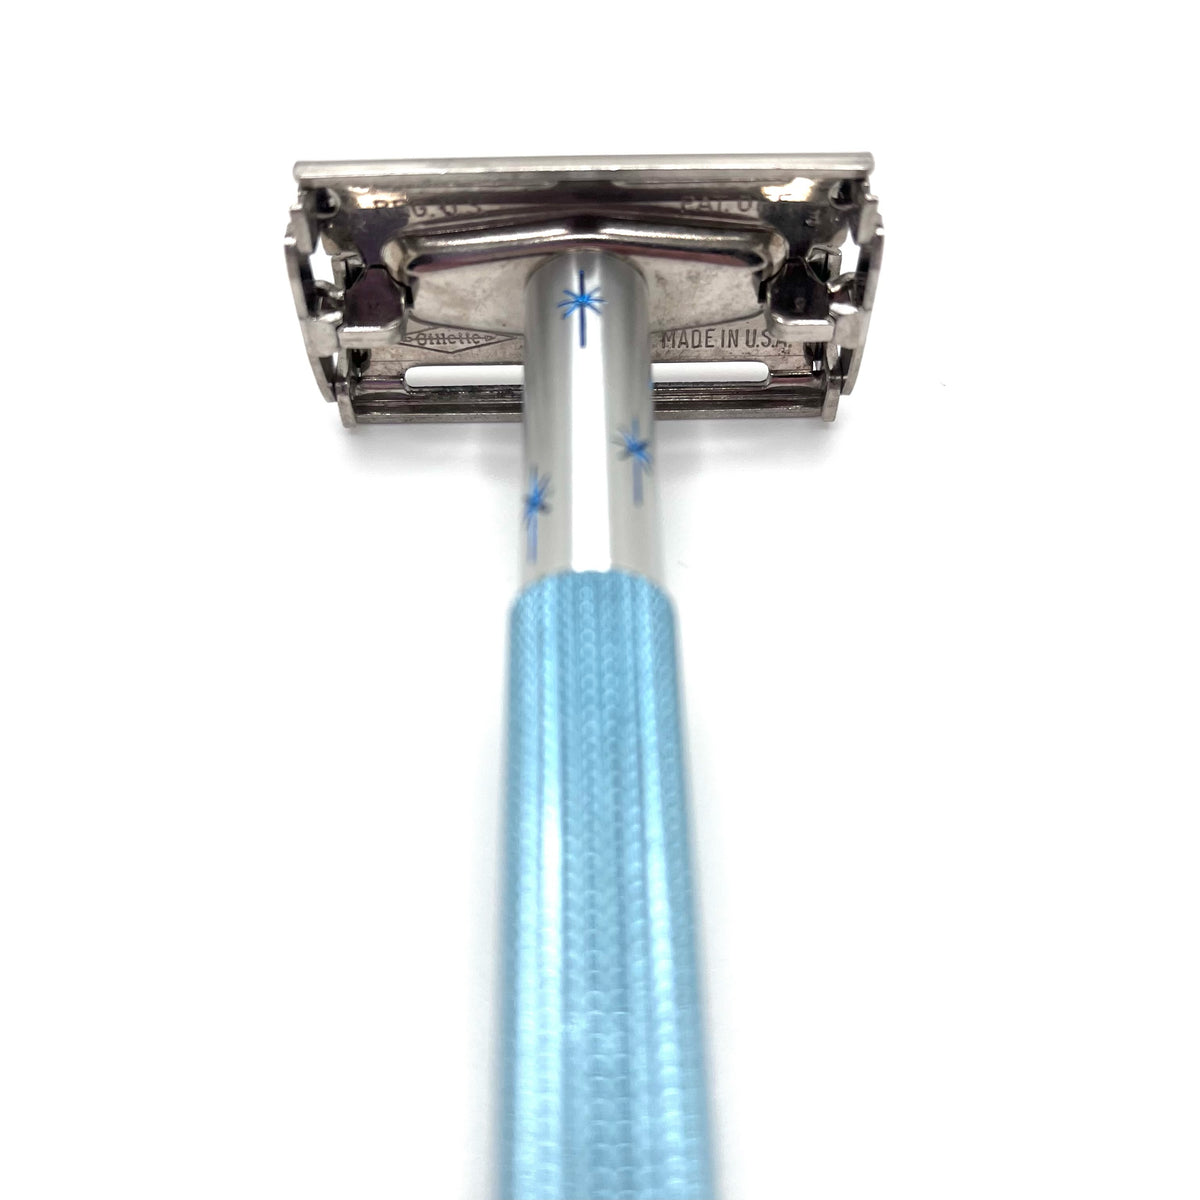 Gillette - Super Blue Double Edge Safety Razor Blades (5 Blades) –  Groomatorium Inc